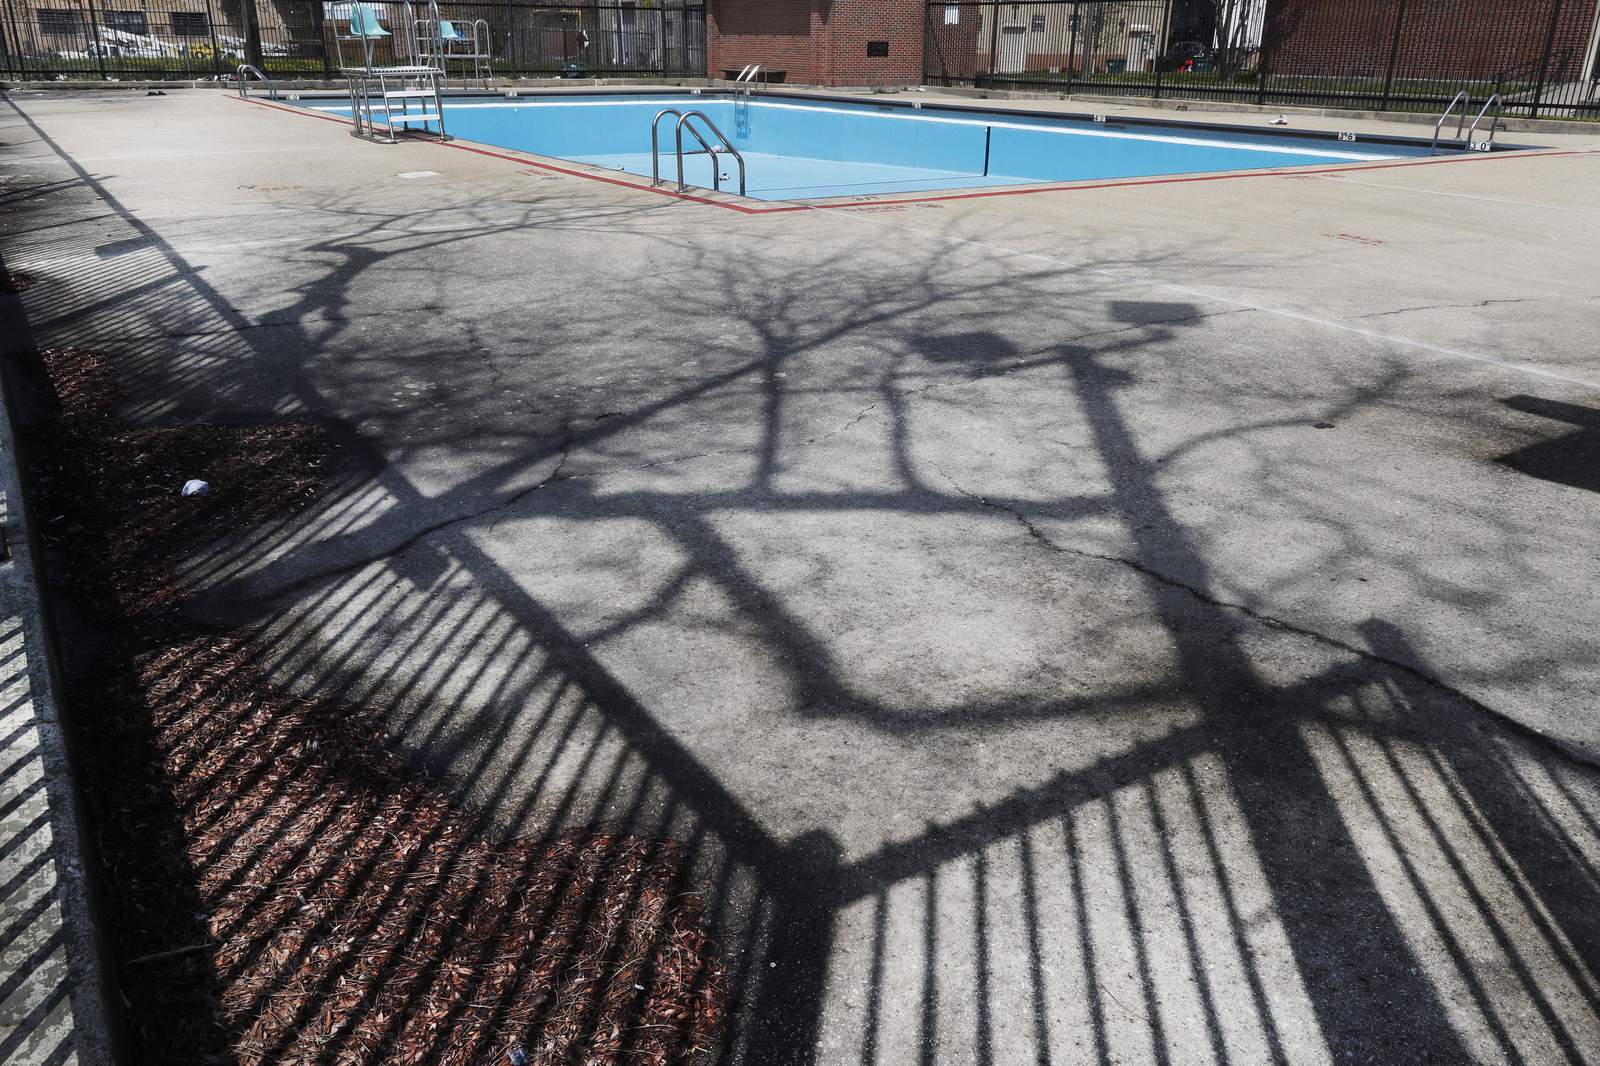 Public swimming pools ordered to close across Southeast Michigan to mitigate spread of COVID-19